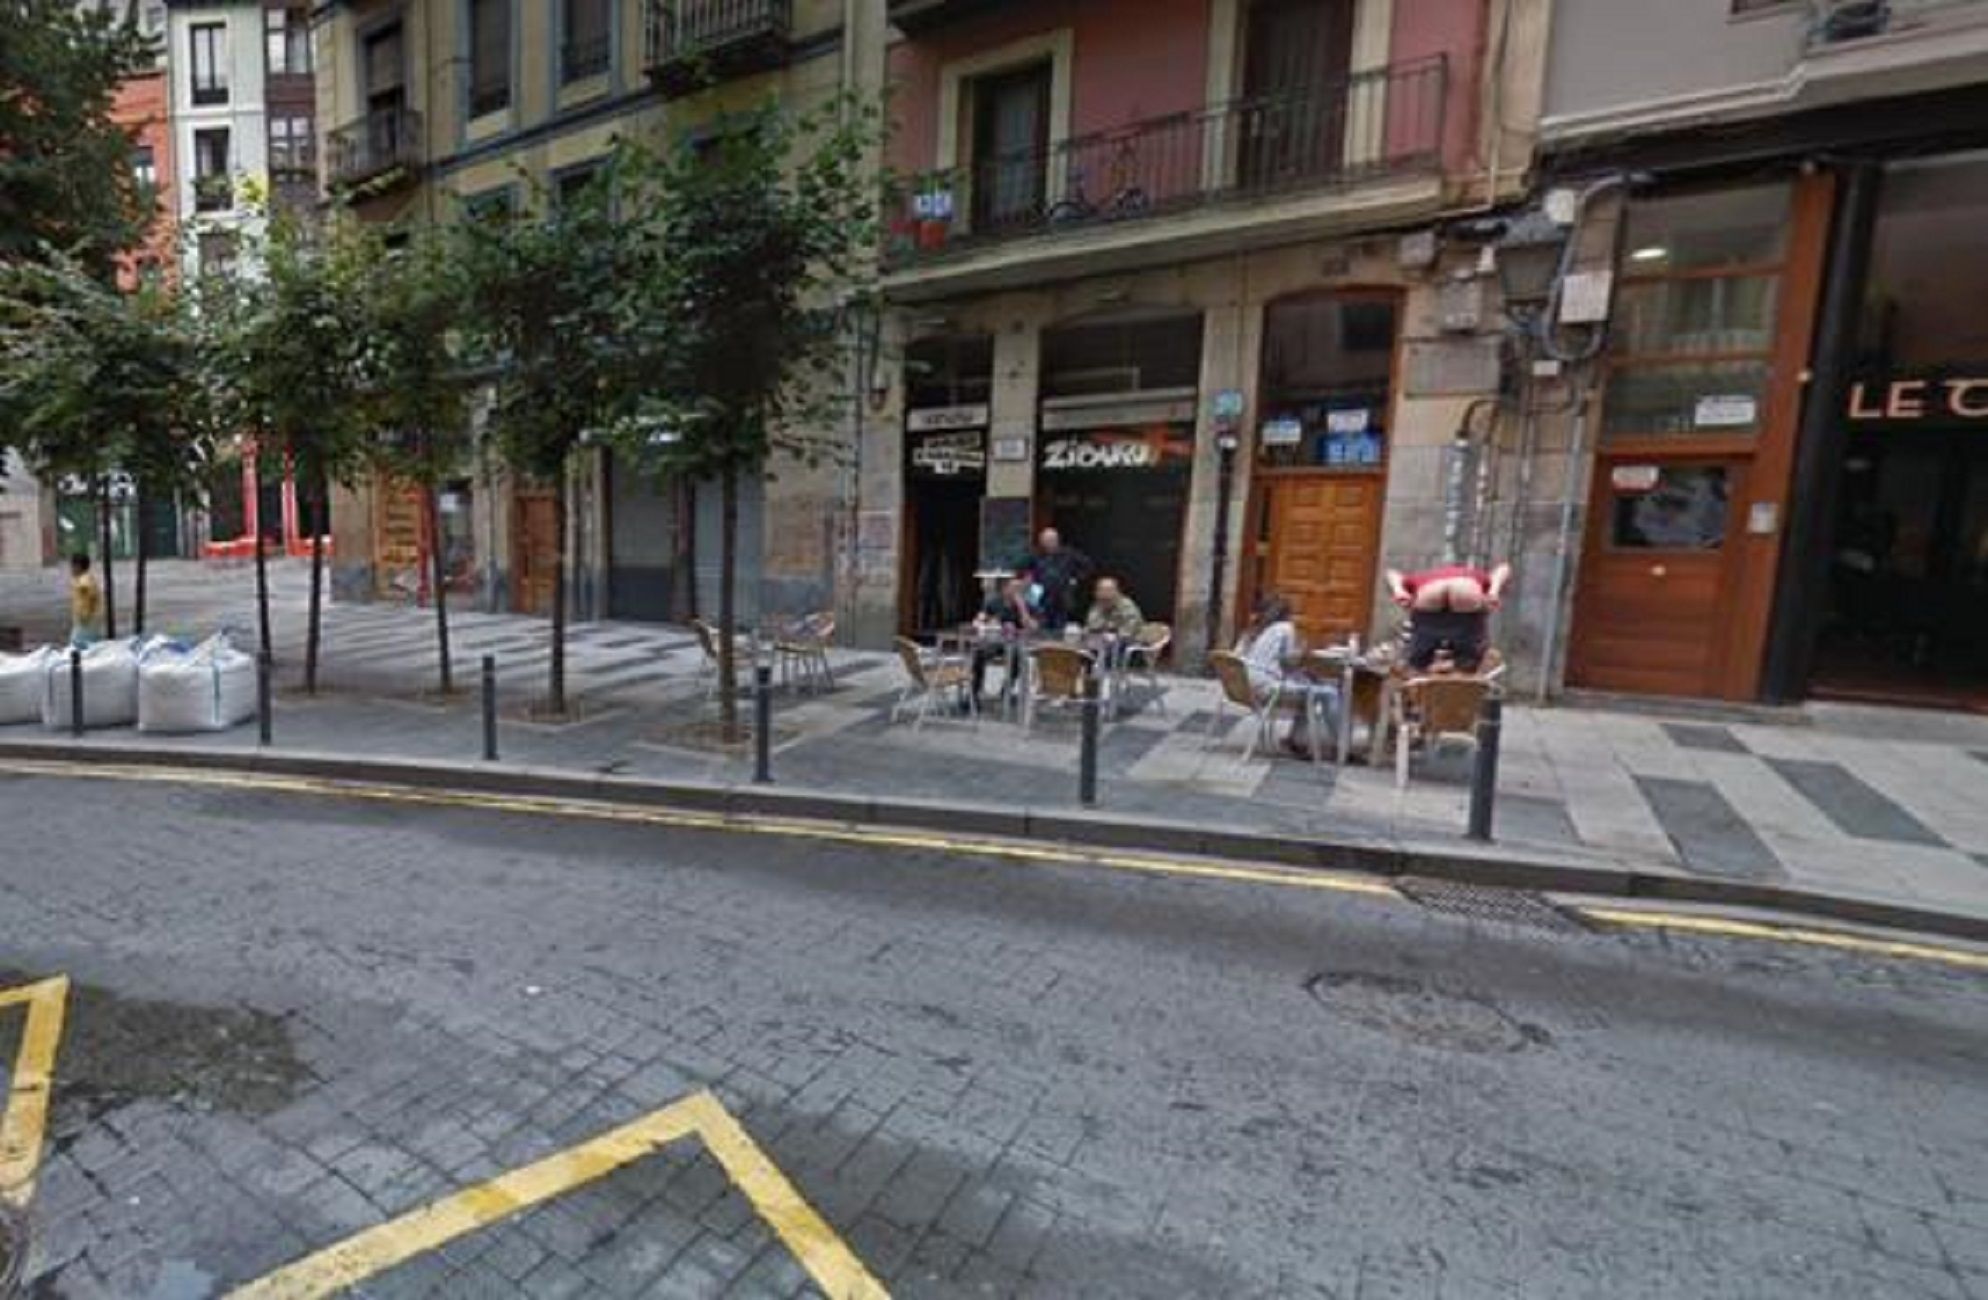 Calvo Bilbao / Google Maps